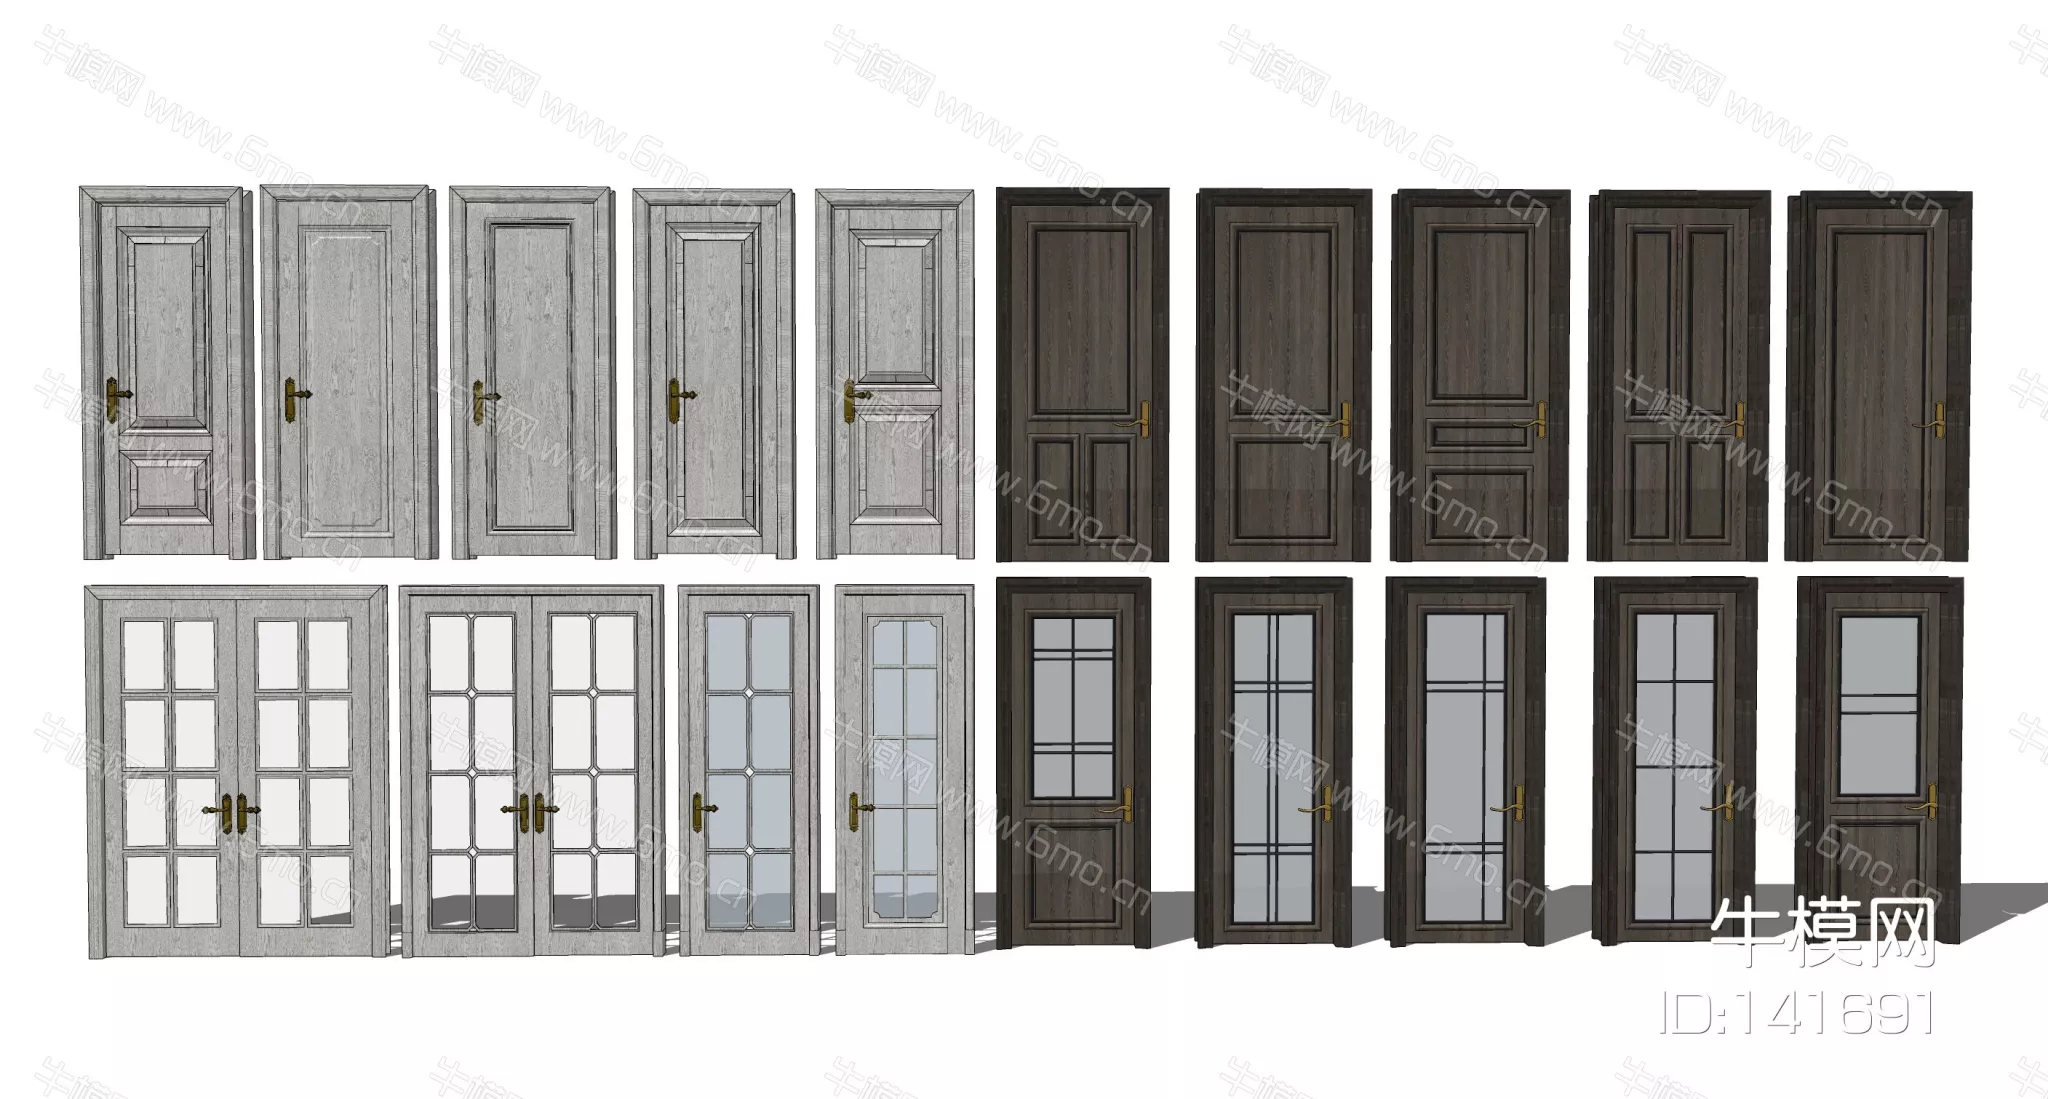 MODERN DOOR AND WINDOWS - SKETCHUP 3D MODEL - ENSCAPE - 141691